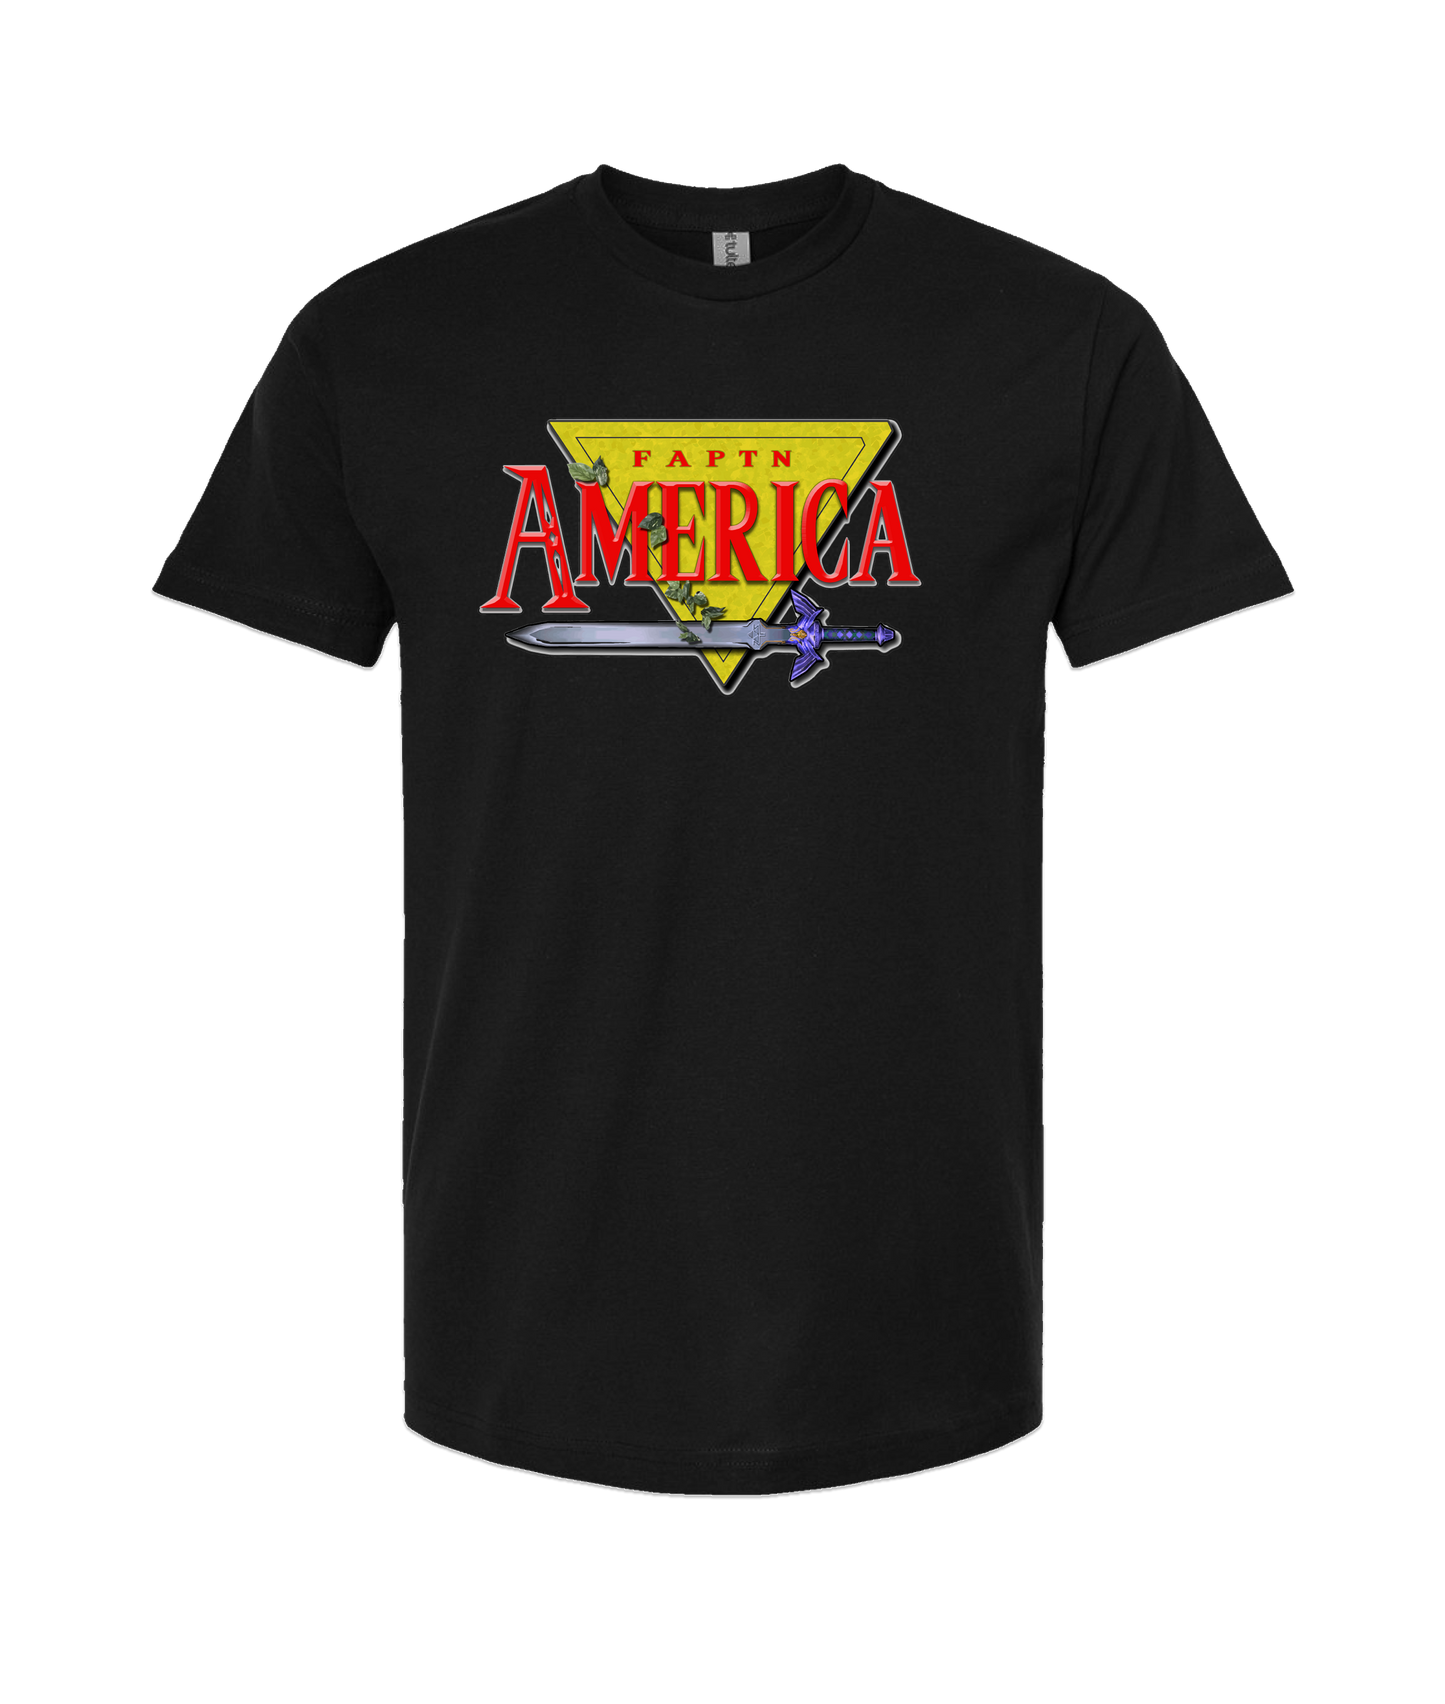 FaptnAmerica - Fapelda - Black T-Shirt